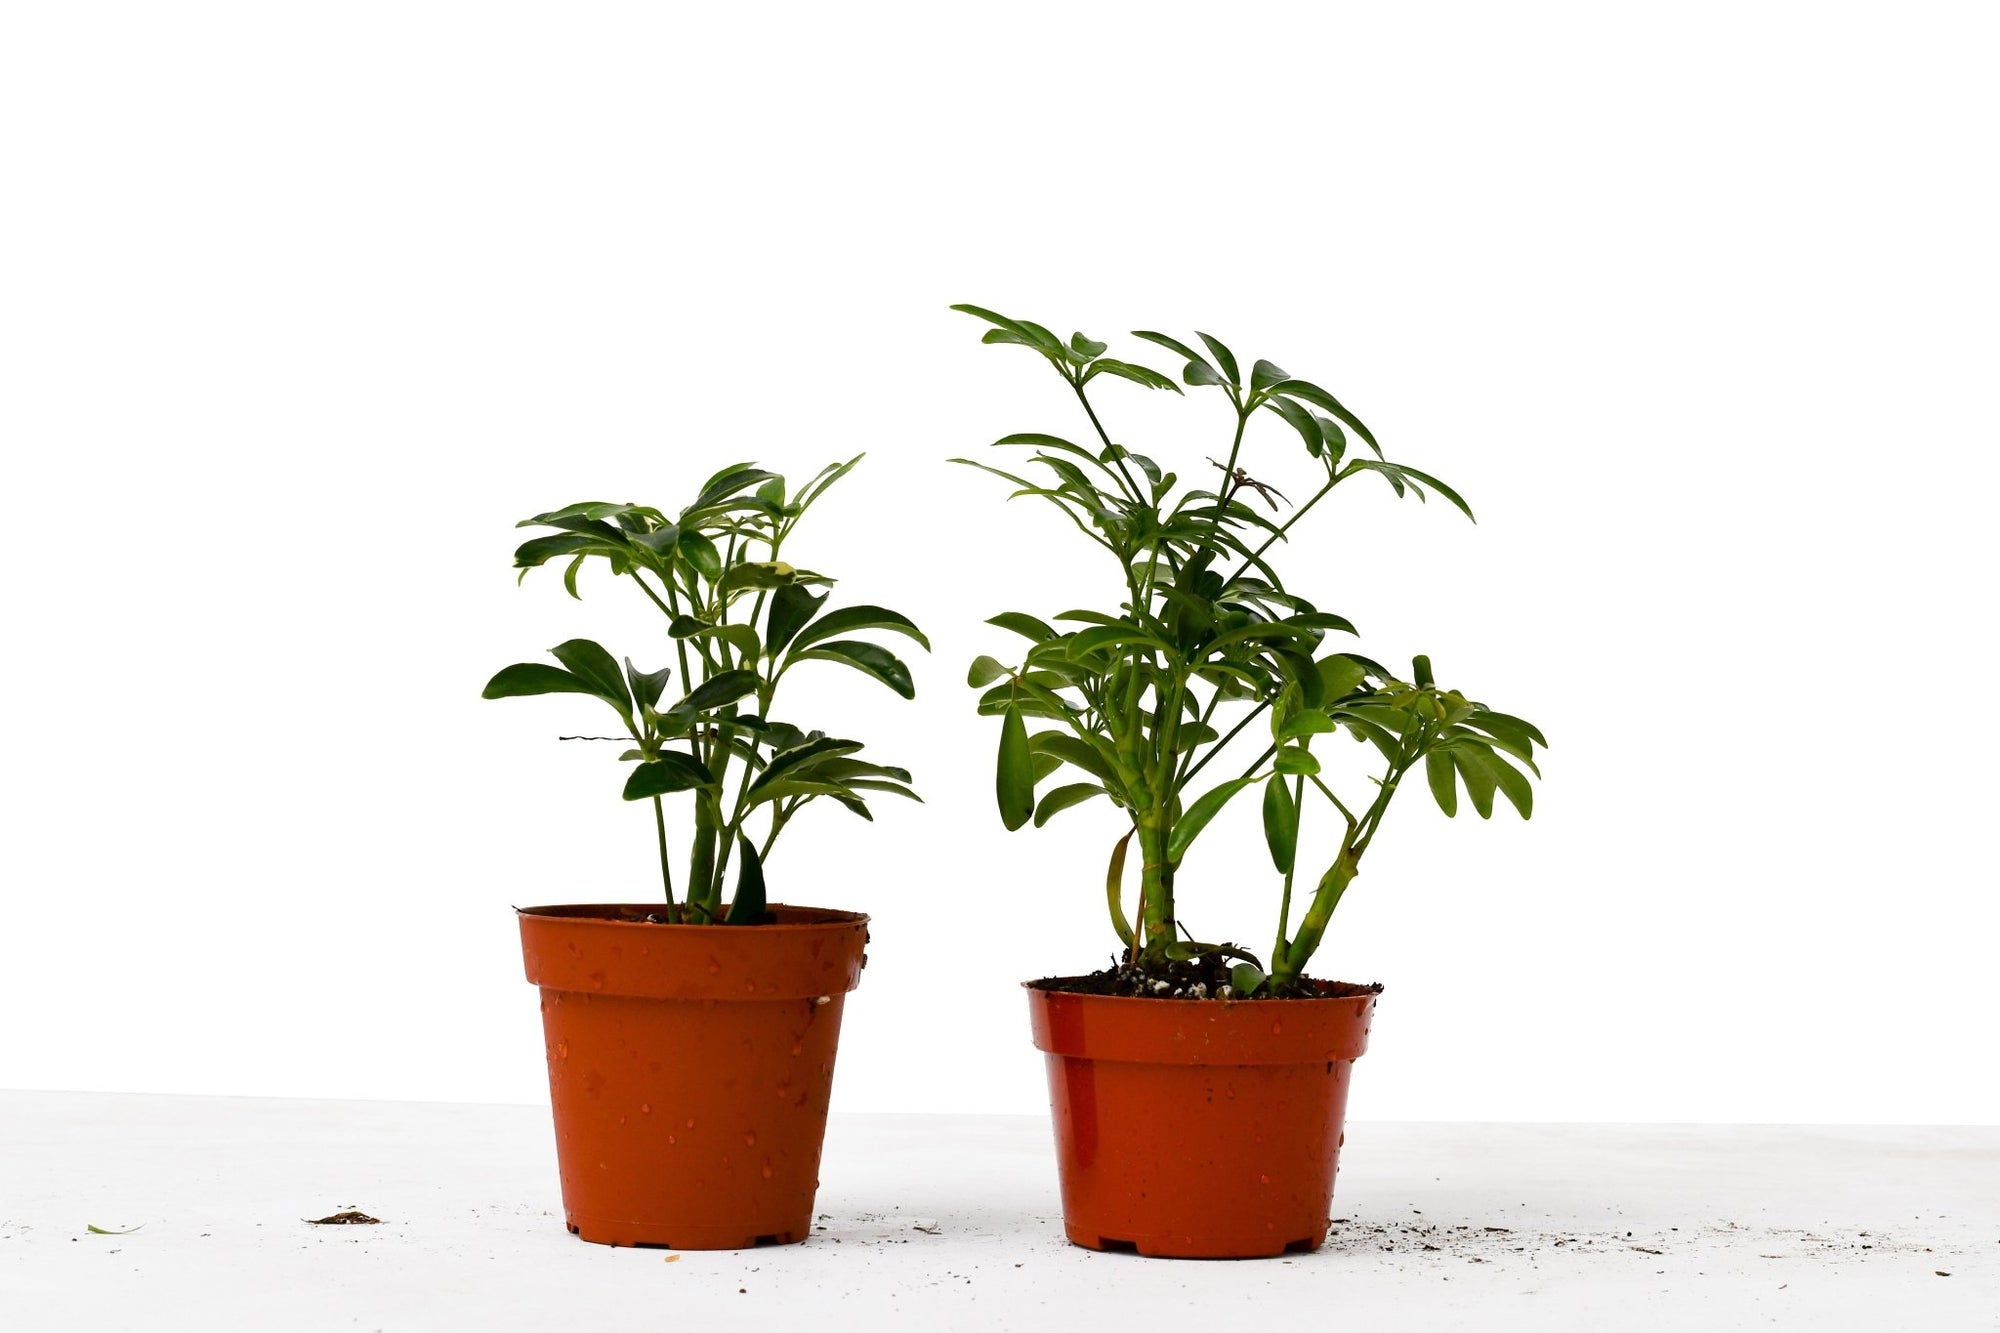 2 Different Schefflera Plants Variety Pack - 4" Pot - Planty Love Co